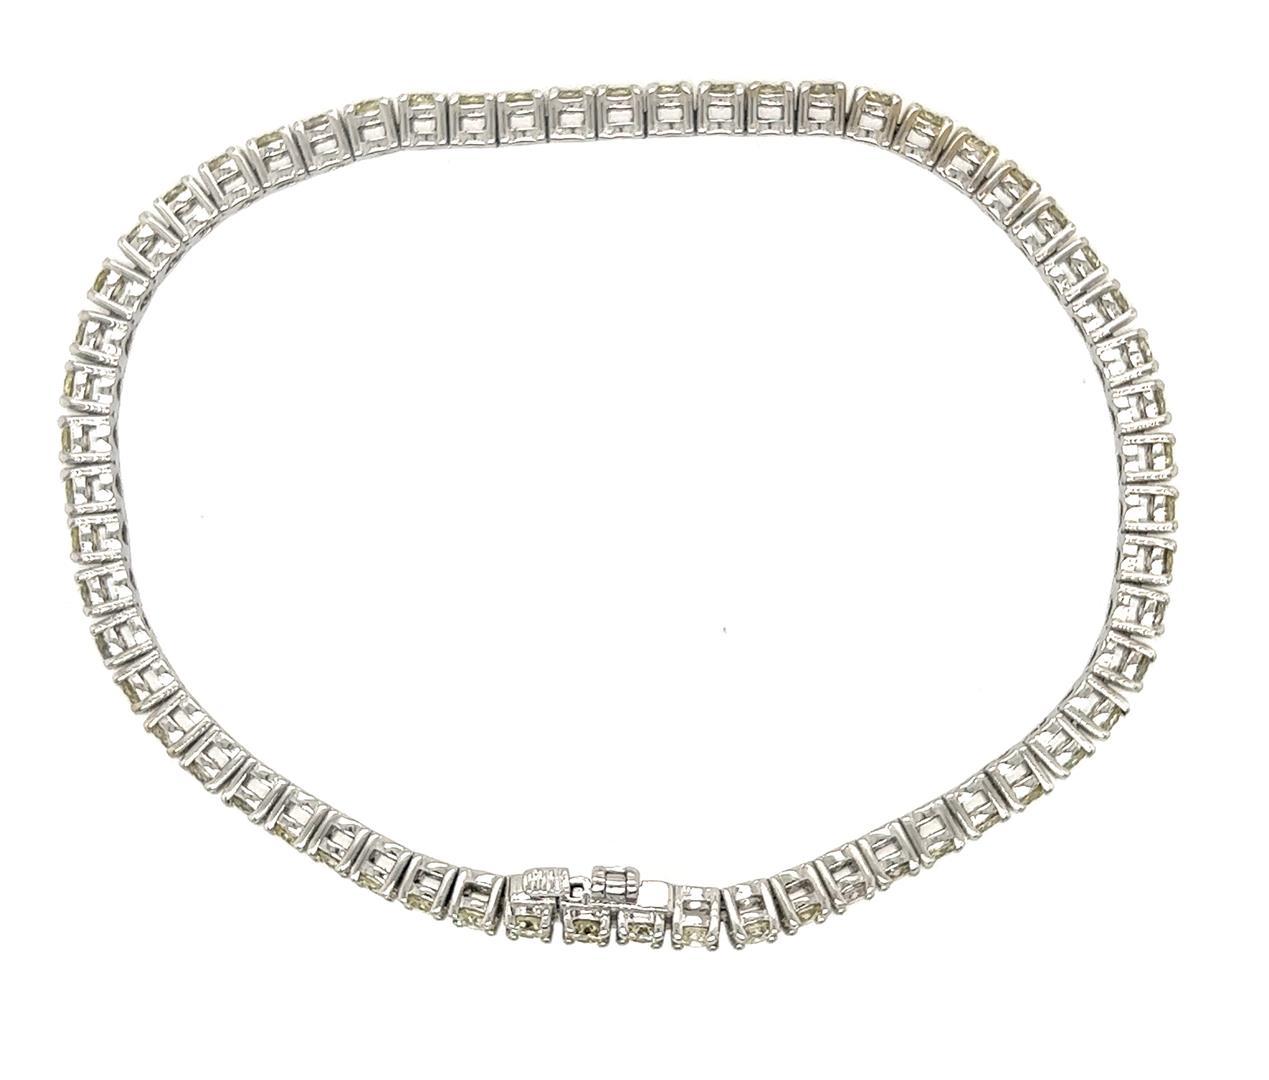 11.12 ctw Diamond Tennis Bracelet - 14KT White Gold